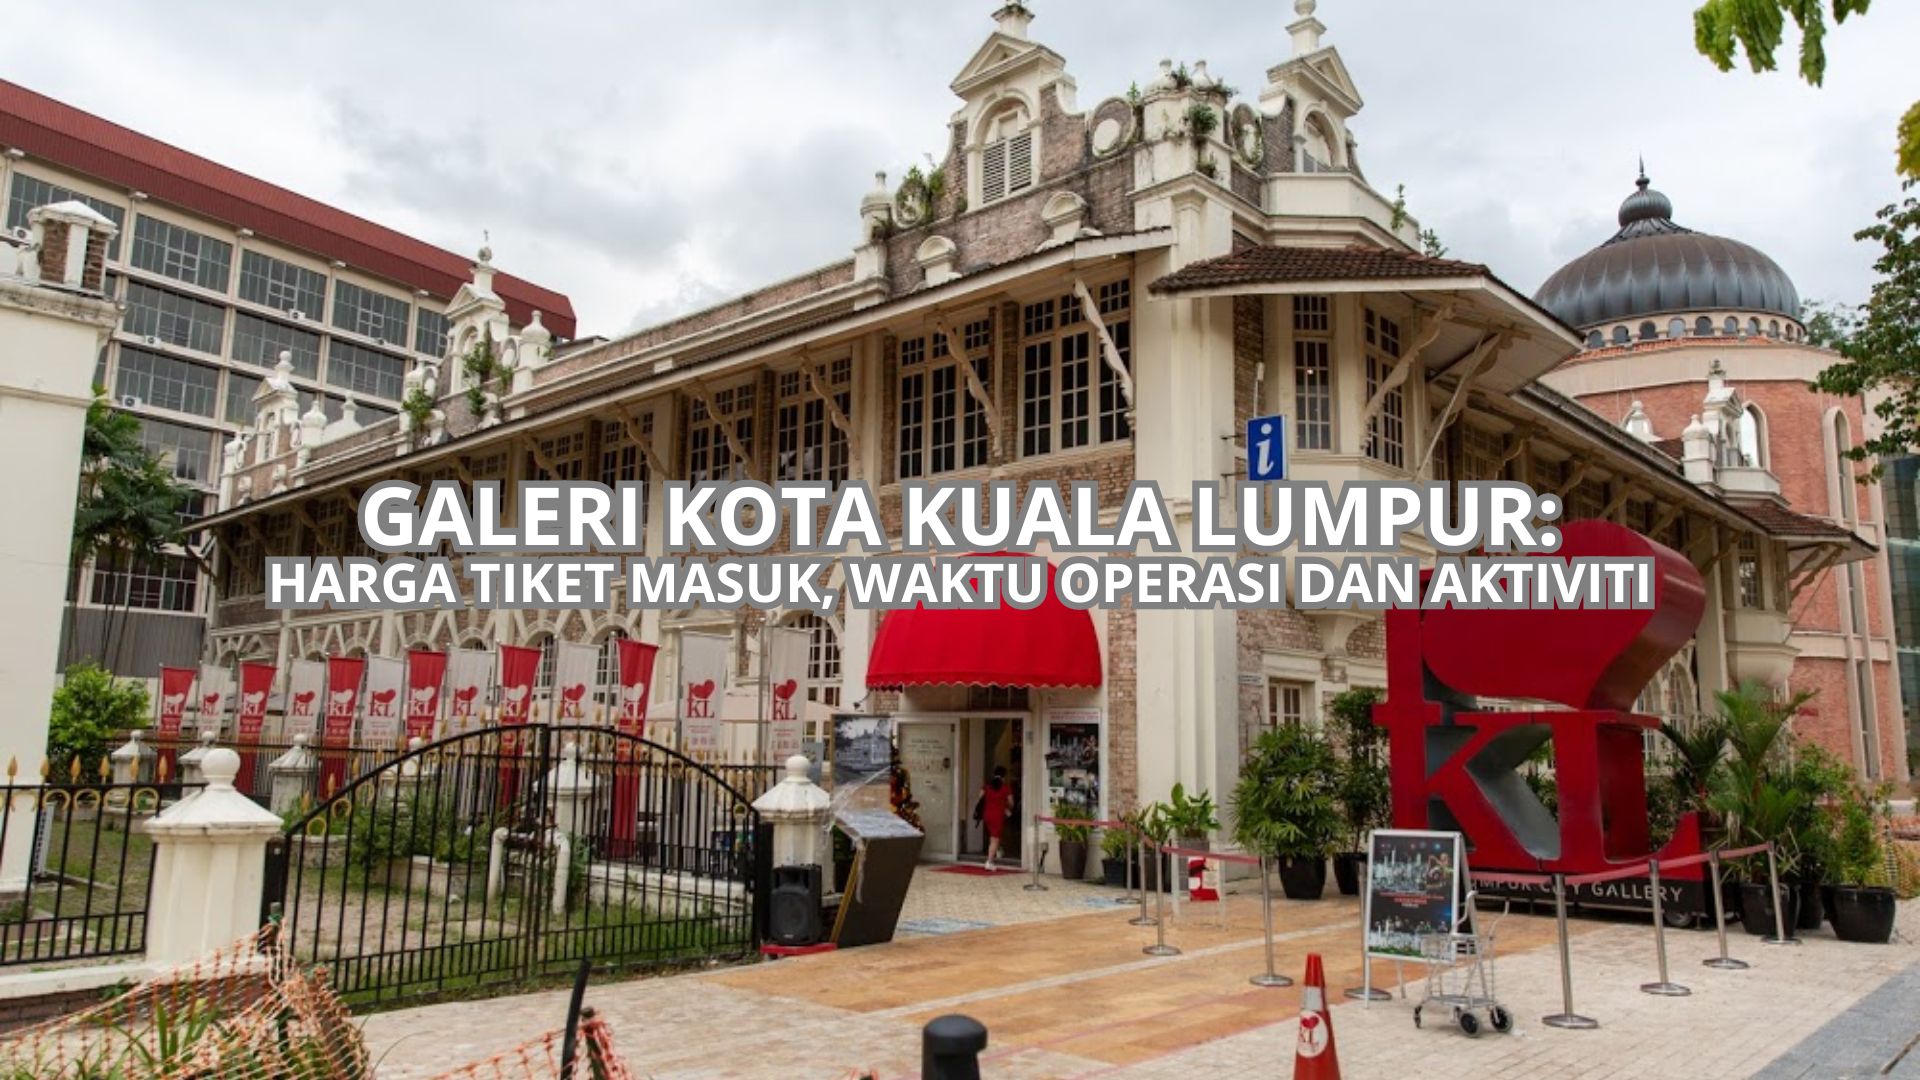 Galeri Kota Kuala Lumpur Cover